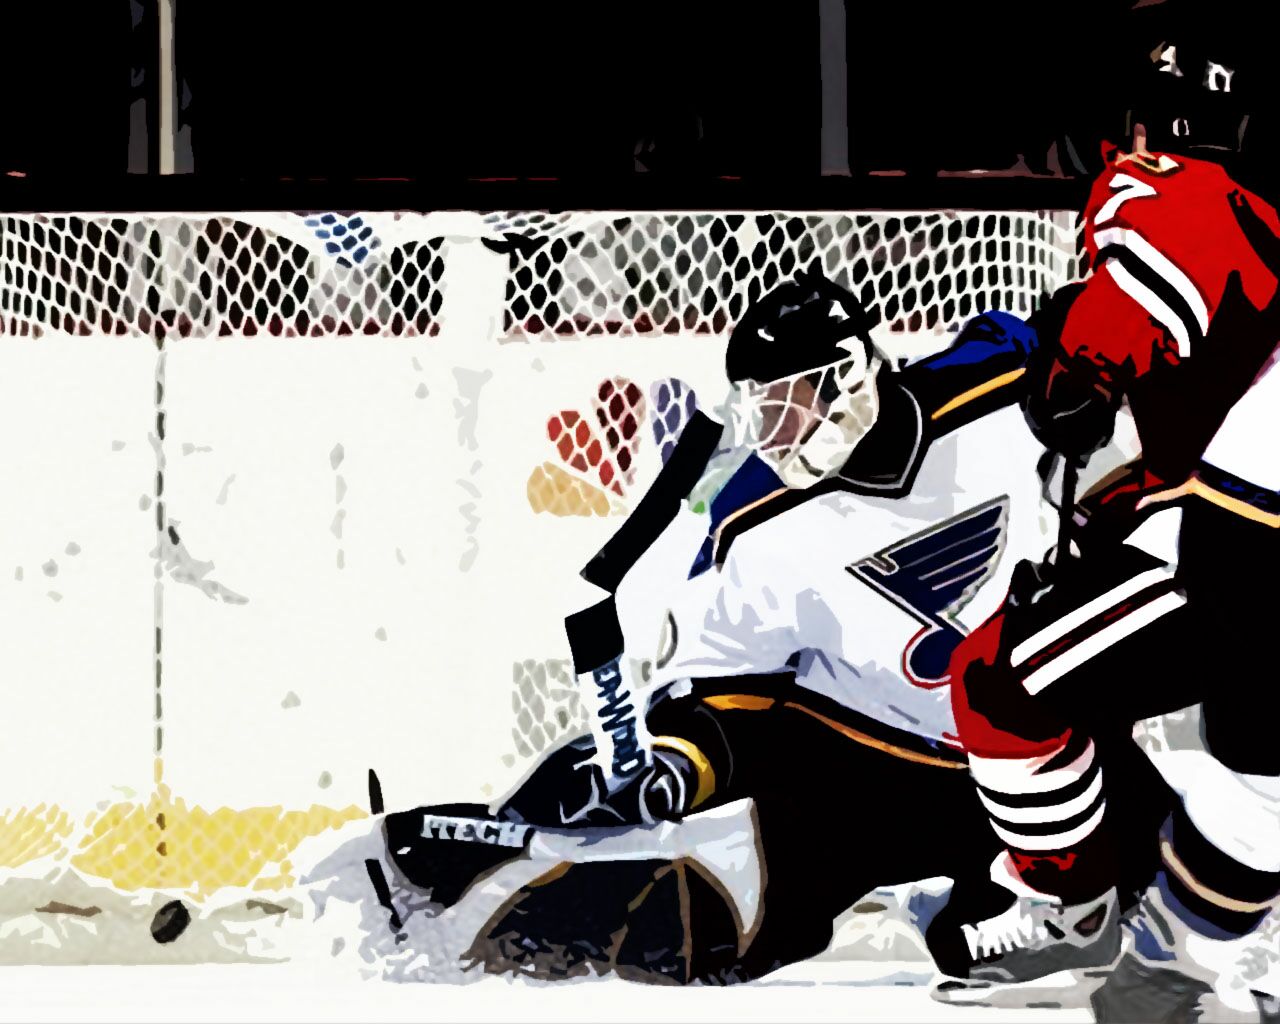 Blues Vs Blackhawks Wall Sports Wallpaper Image Featuring Ice Hockey